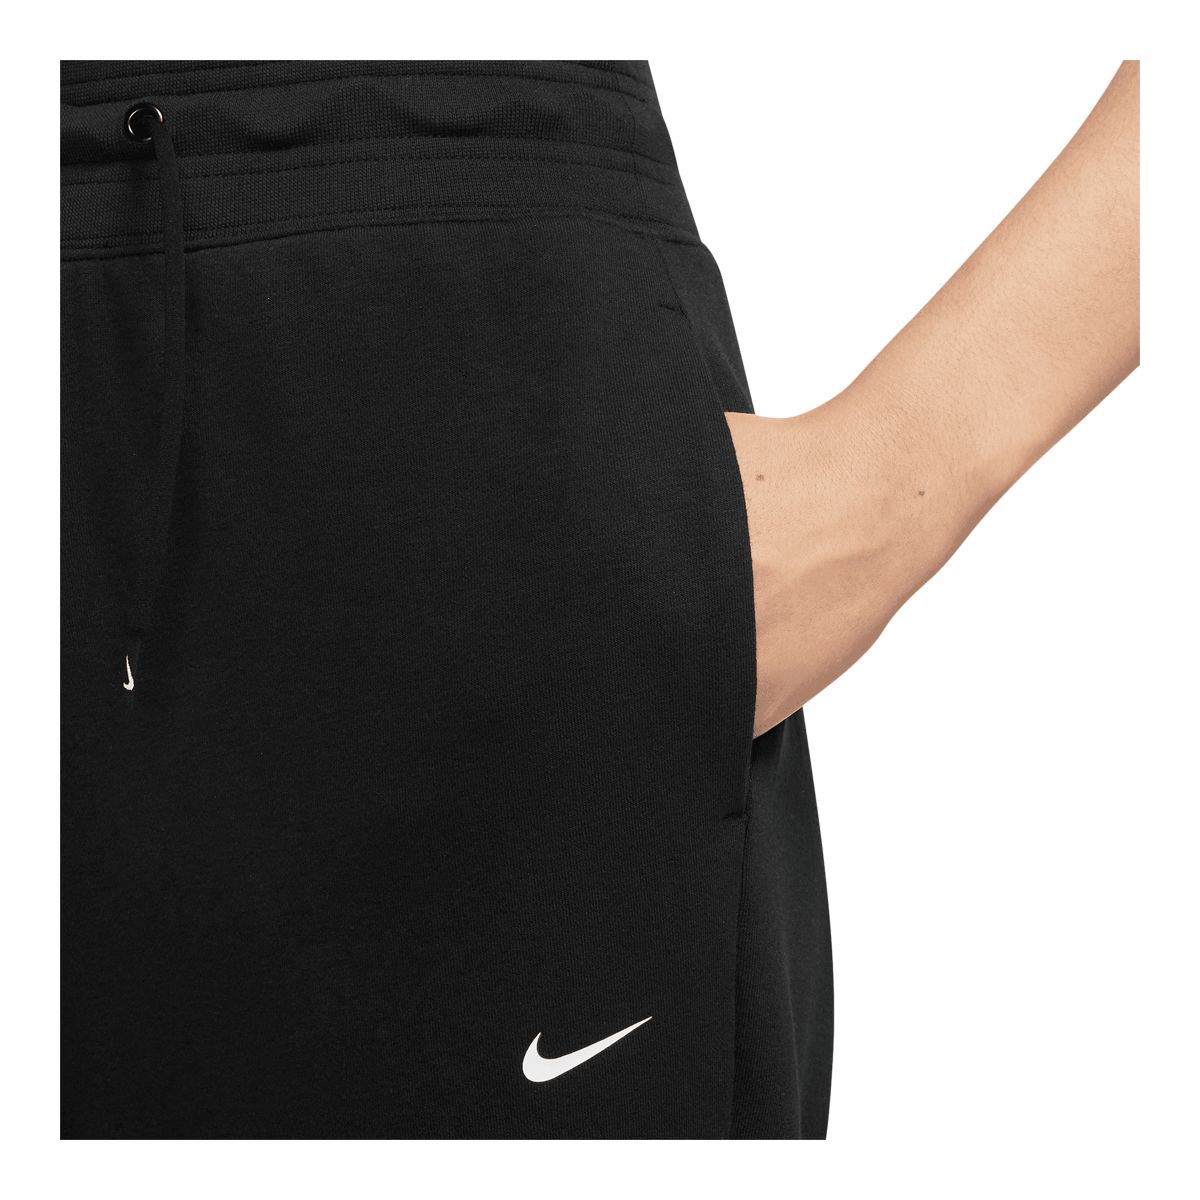 Nike Womens M Elastic Waistband Stretchy Athletic Dri Fit Pants